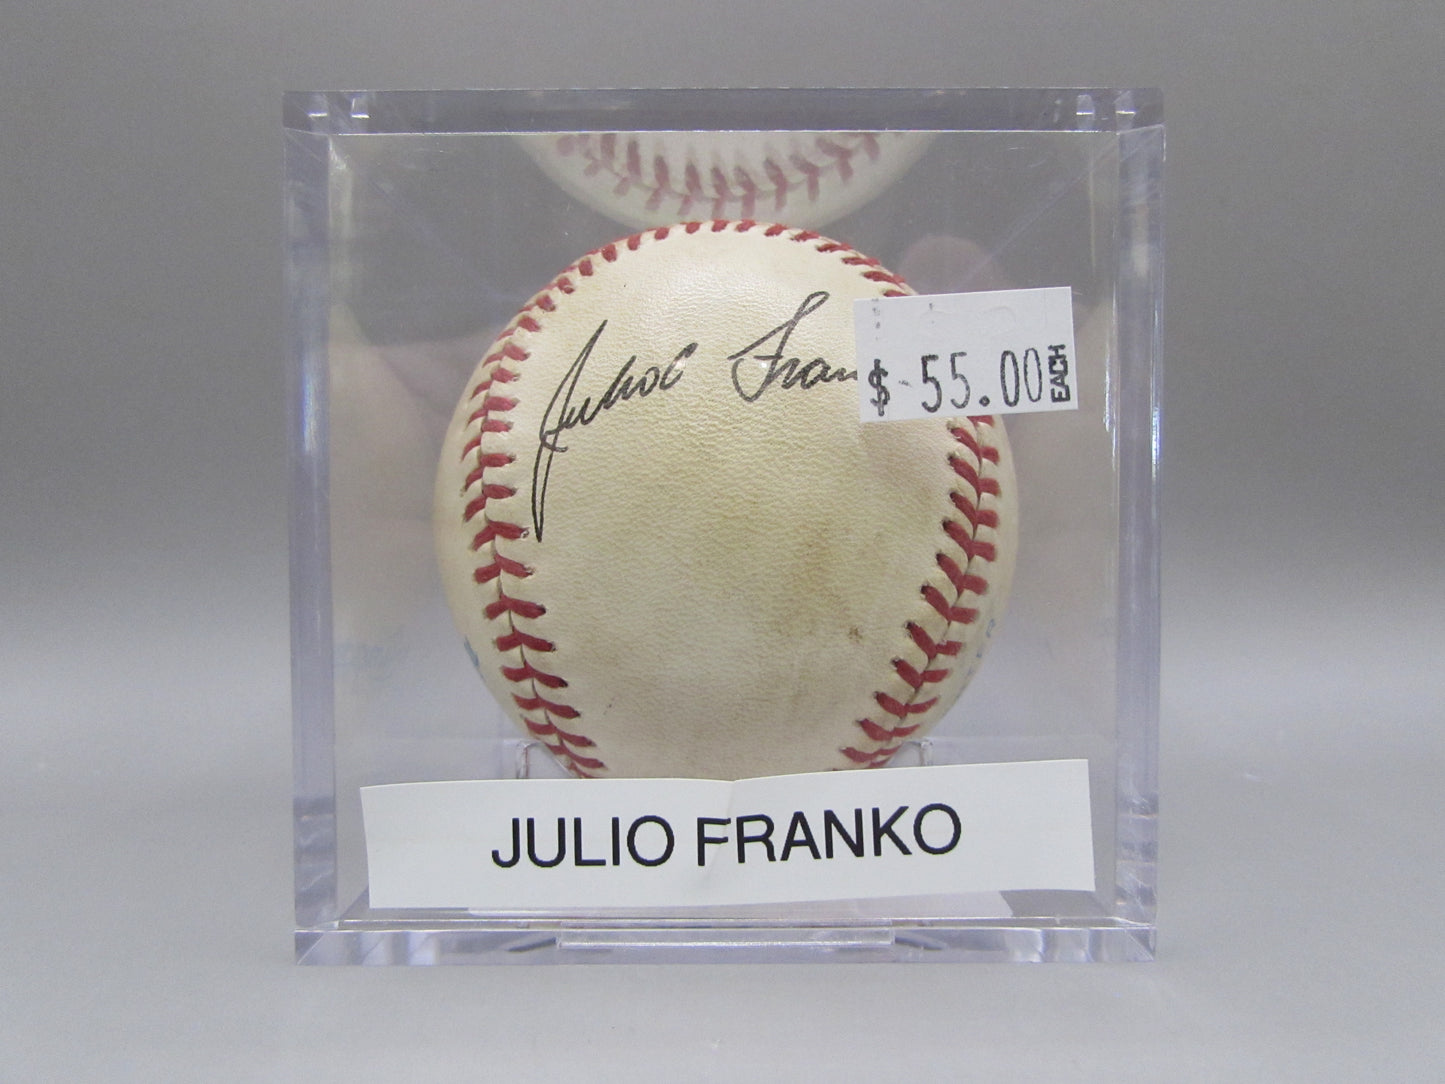 Julio Franko signed baseball